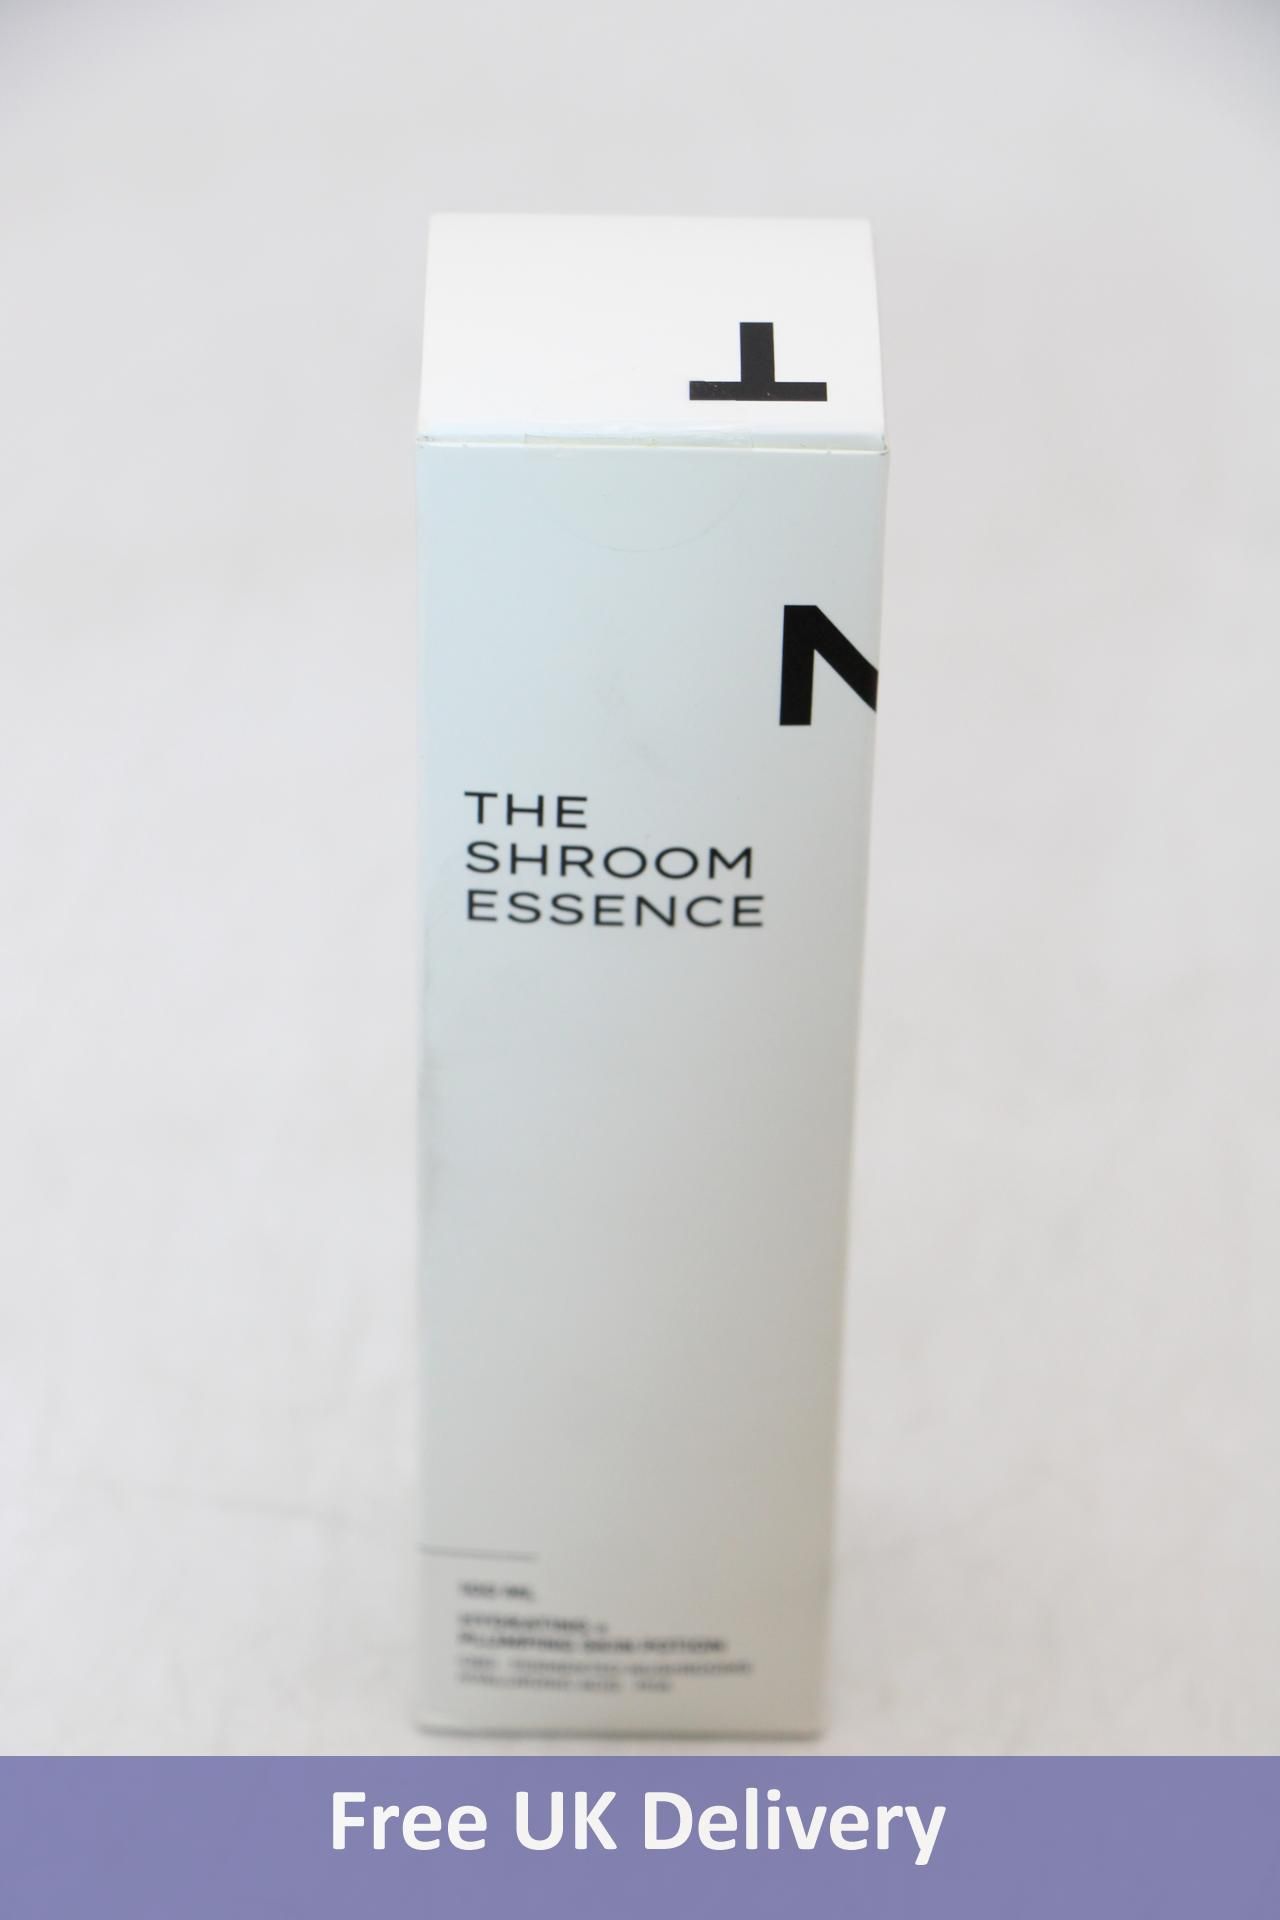 Ten Mantle The Shroom Essence Bottle Hydrating x Plumping Skin Potion Cbd, Size 100ml - Image 2 of 10